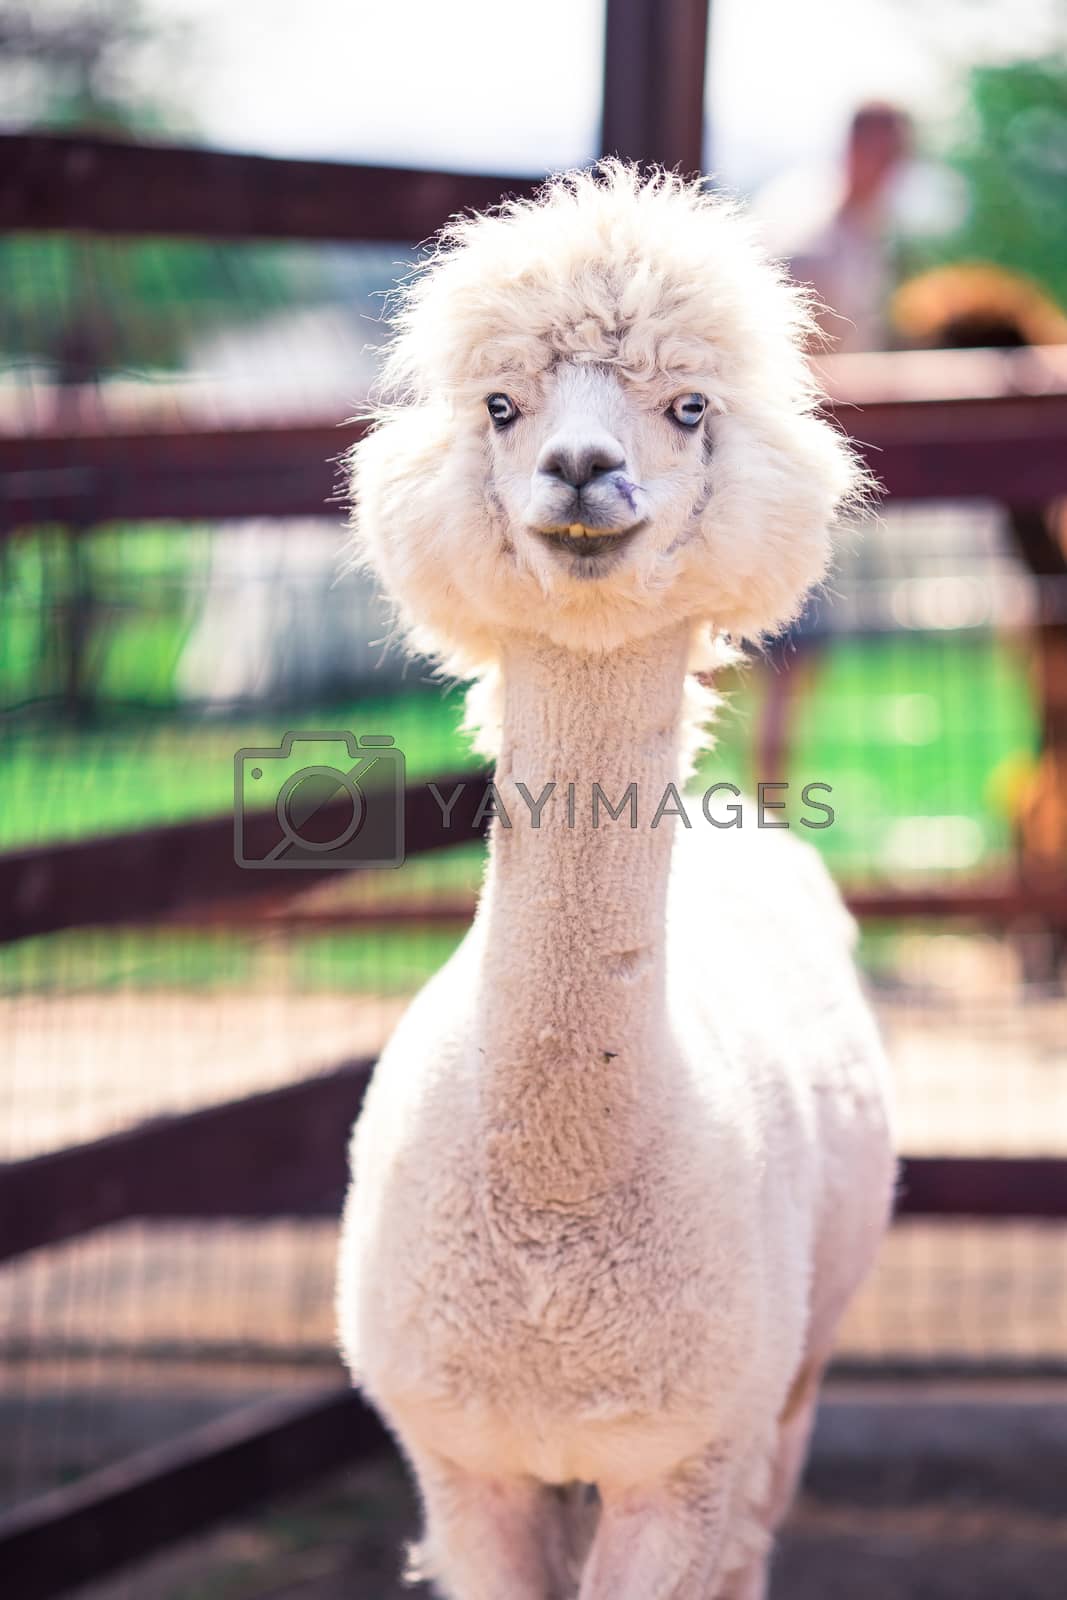 Royalty free image of Portrait of a sweet white llama - alpaca by travnikovstudio